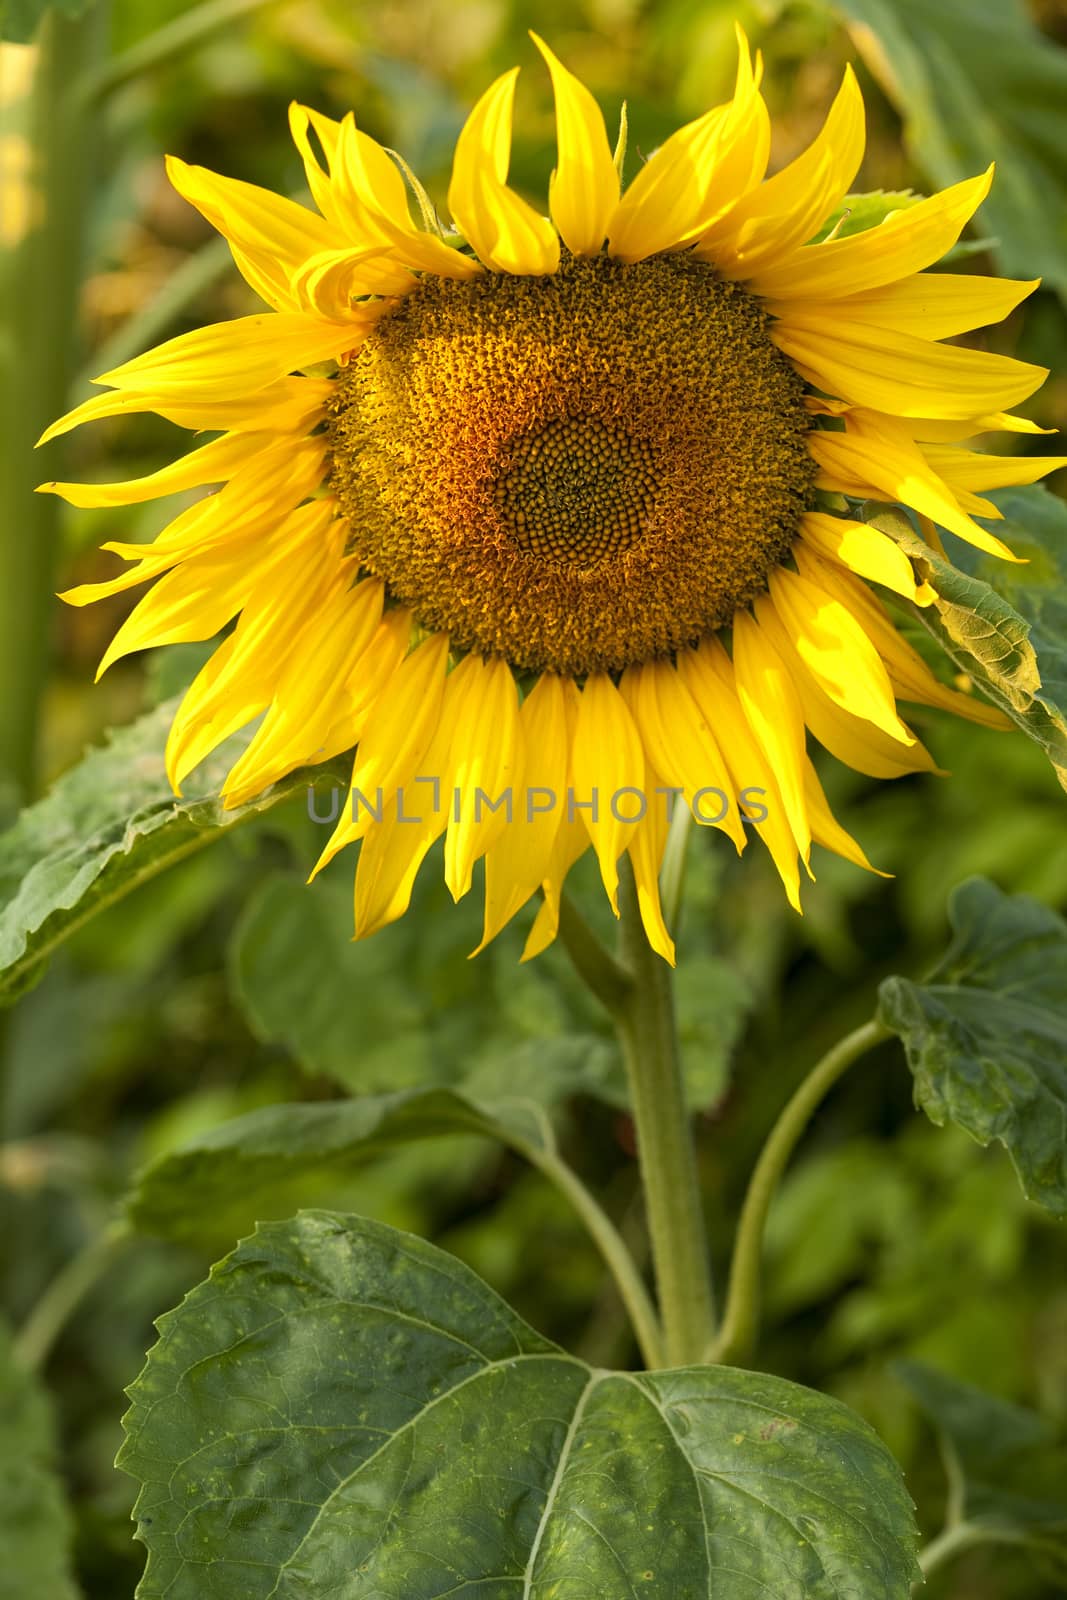 large decorative sunflower grows in garden